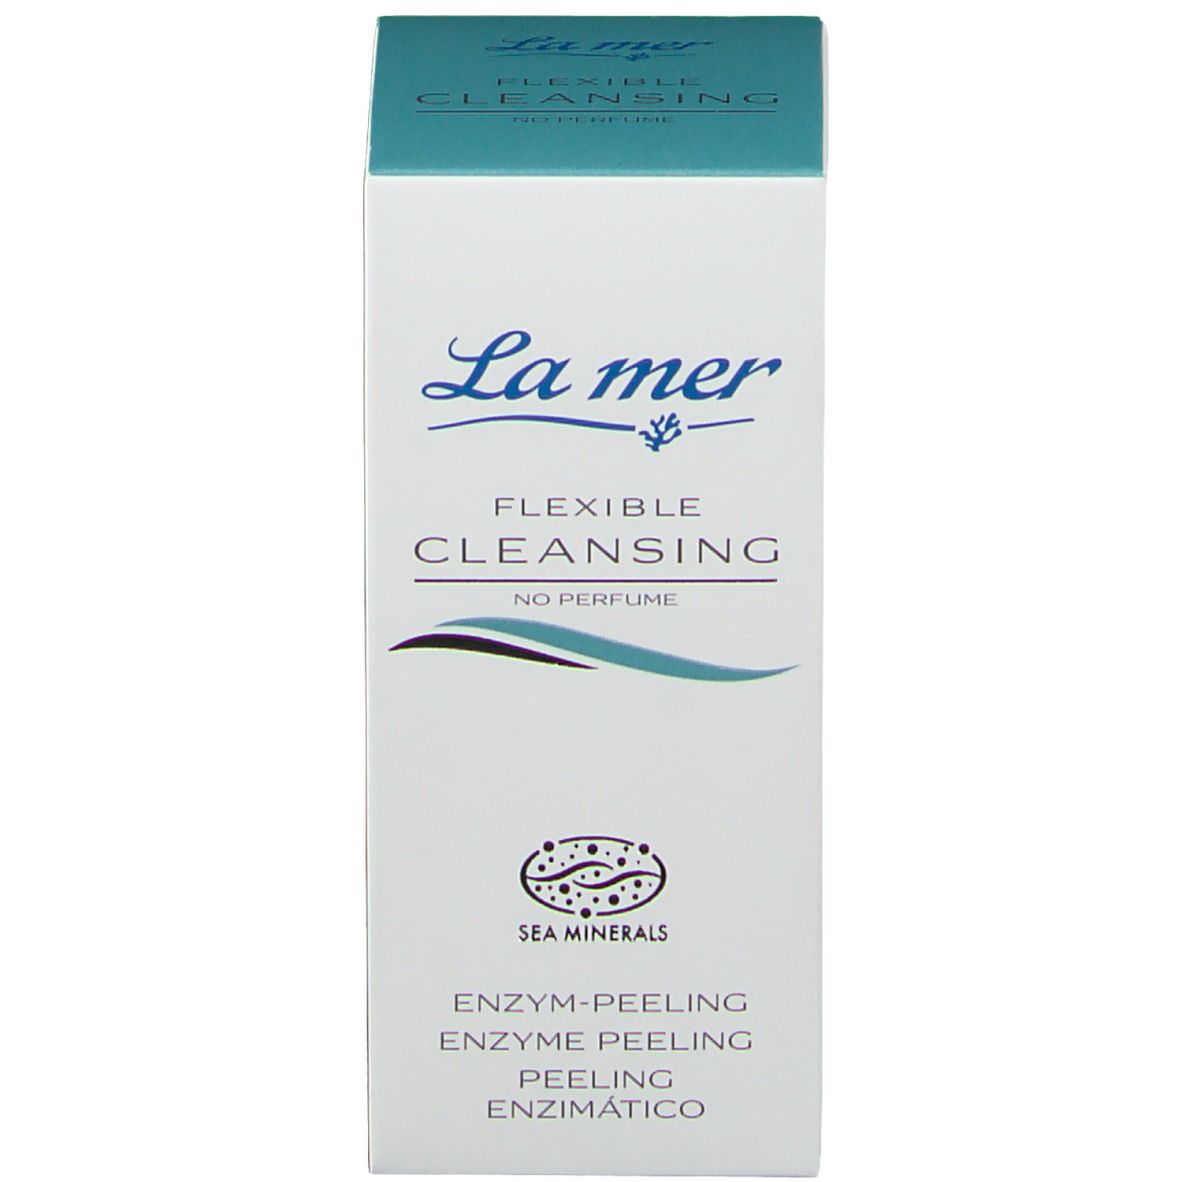 La mer FLEXIBLE Cleansing Enzym-Peeling